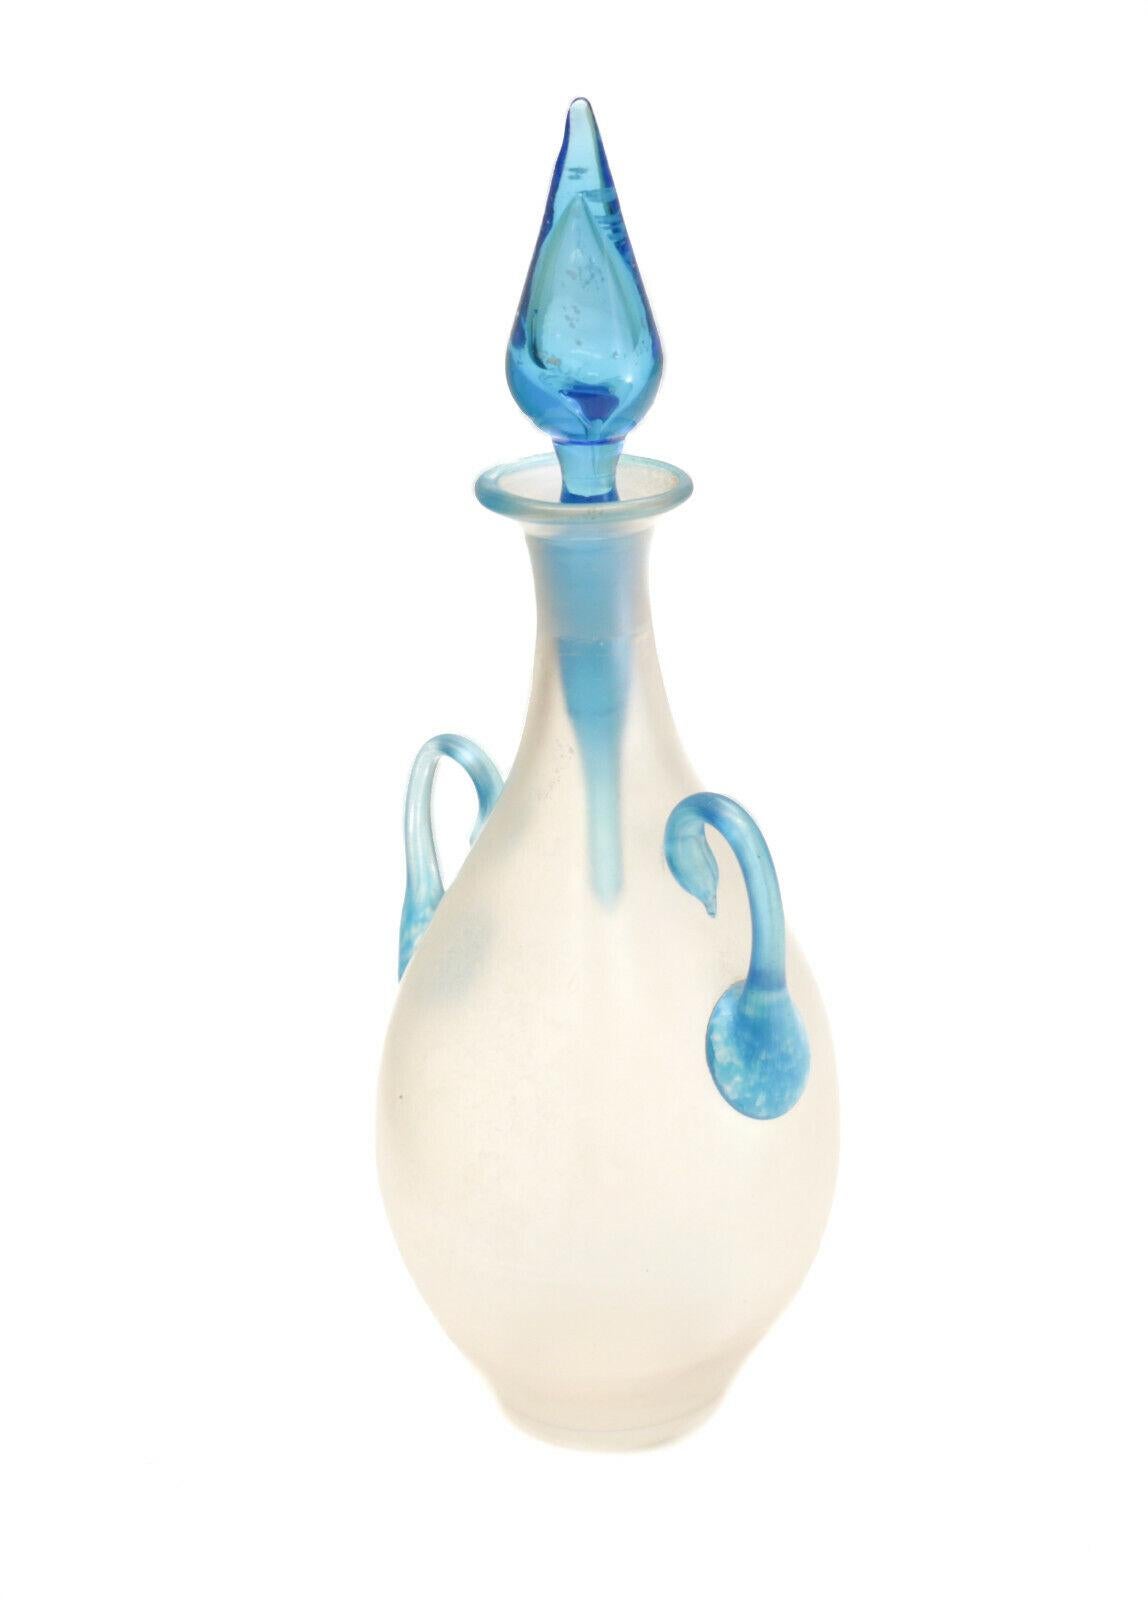 Steuben Silk Glass Perfume Bottle with Handles & Celeste Blue Stopper #3048

Celeste blue handles, lip, and long rod stopper. Unmarked, but a known Steuben piece. 

Additional information:
Pattern: Silk Glass
Type: Perfume Bottle 
Color: